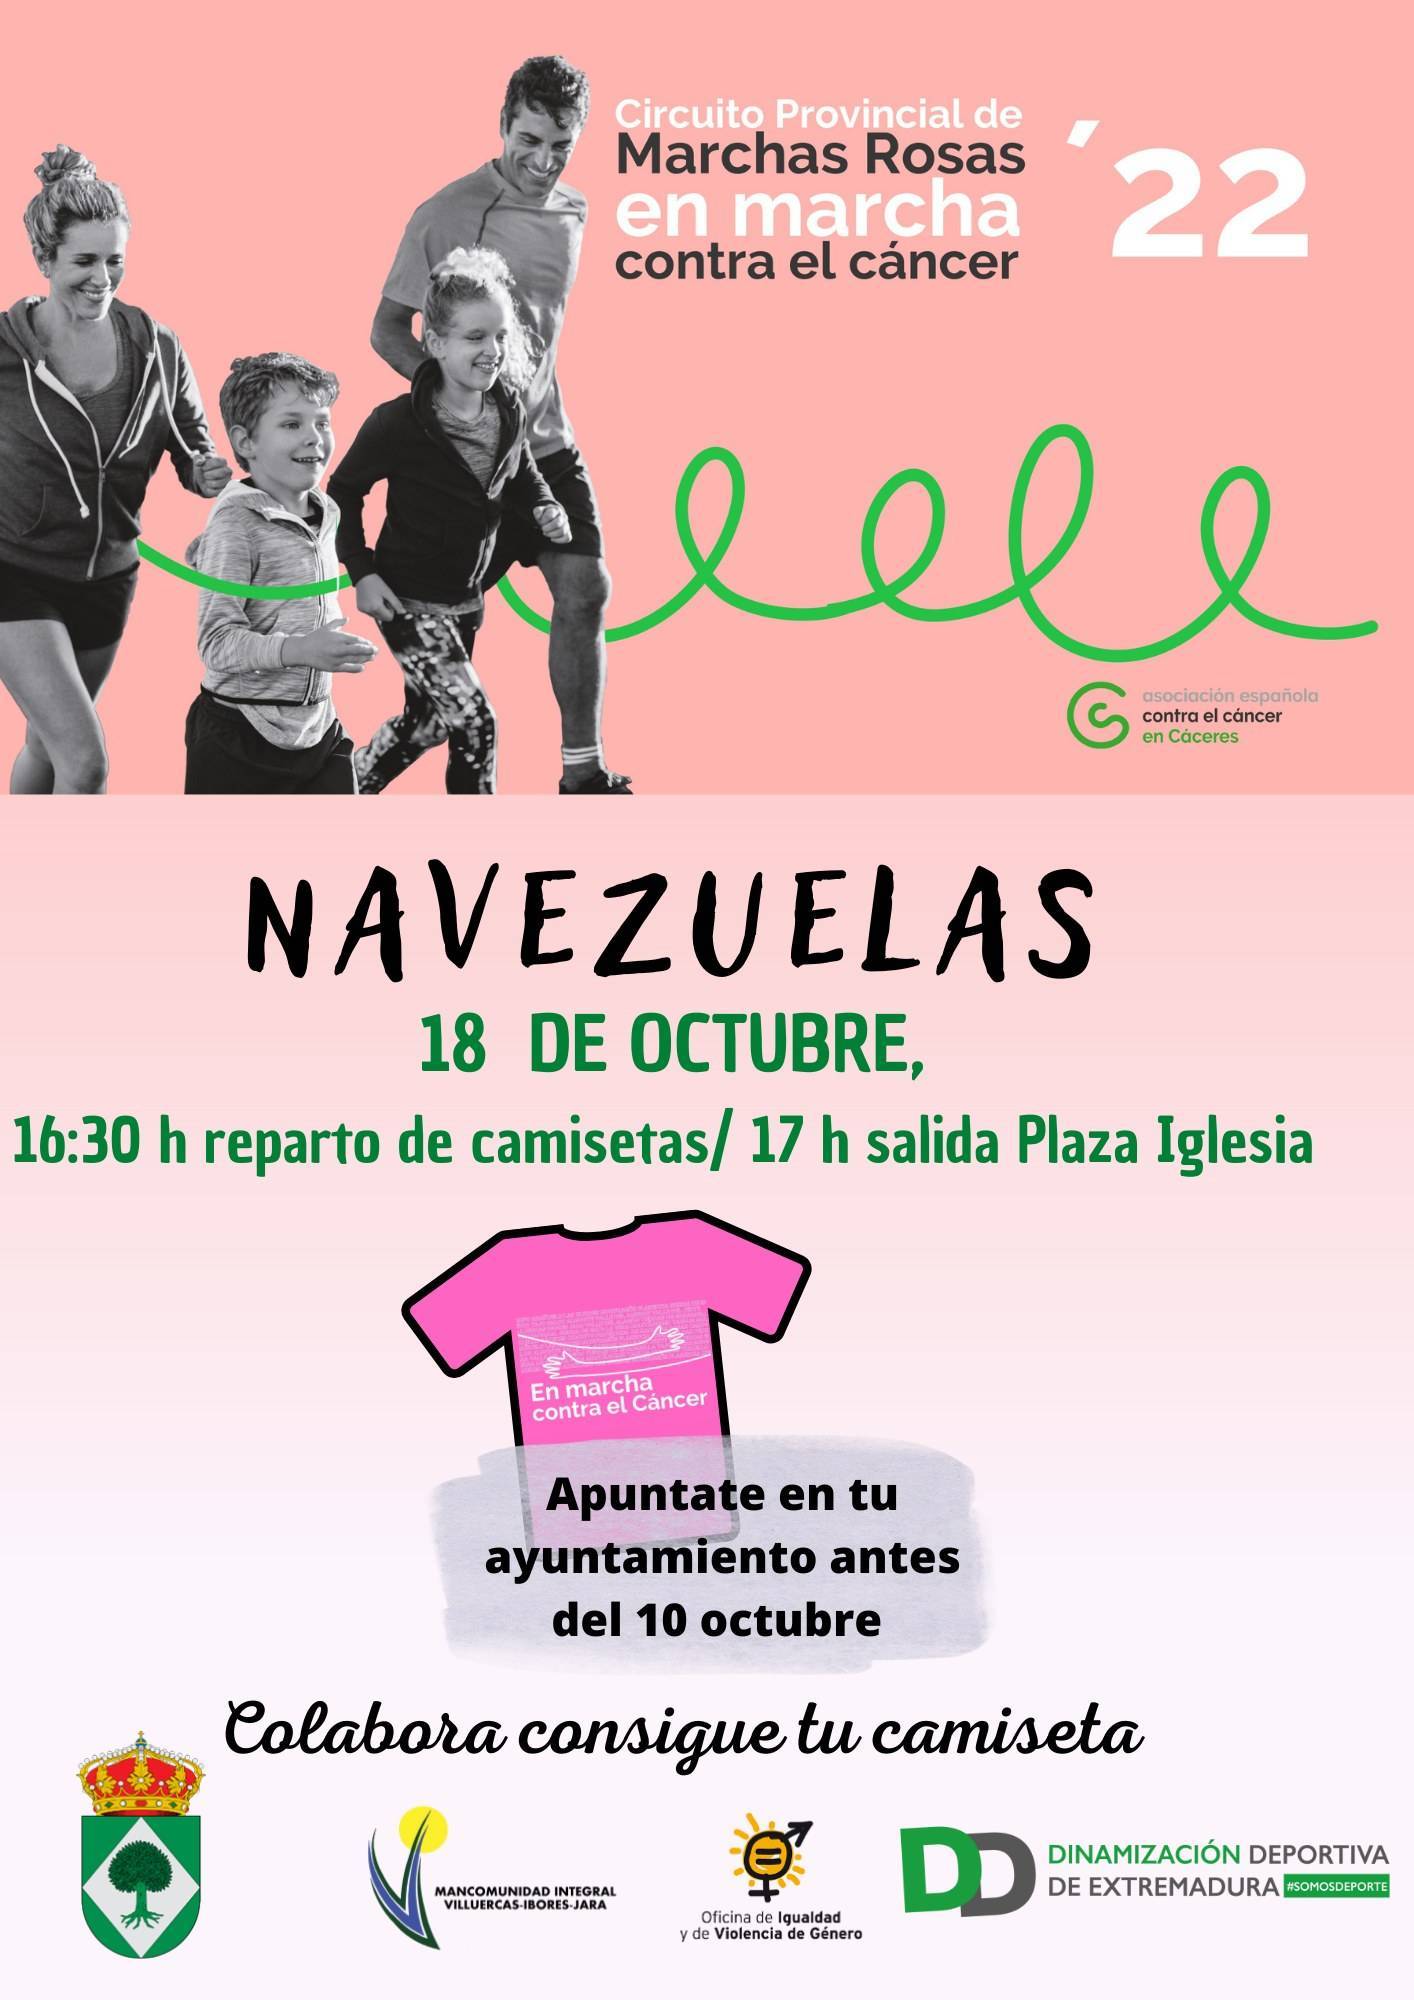 Marcha rosa (2022) - Navezuelas (Cáceres)